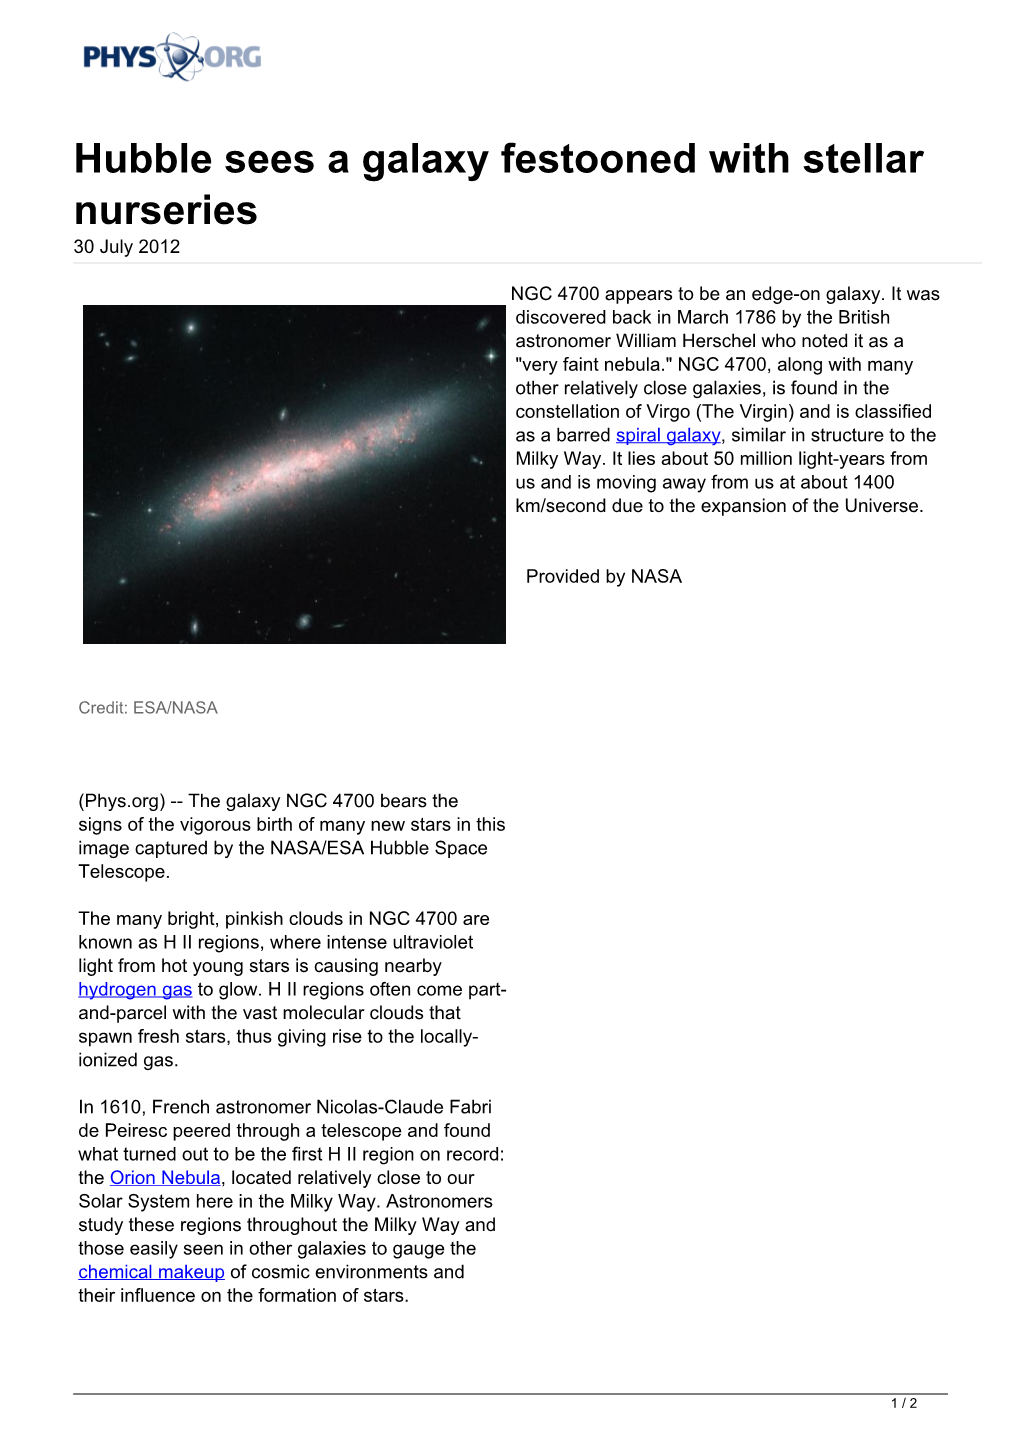 Hubble Sees a Galaxy Festooned with Stellar Nurseries 30 July 2012